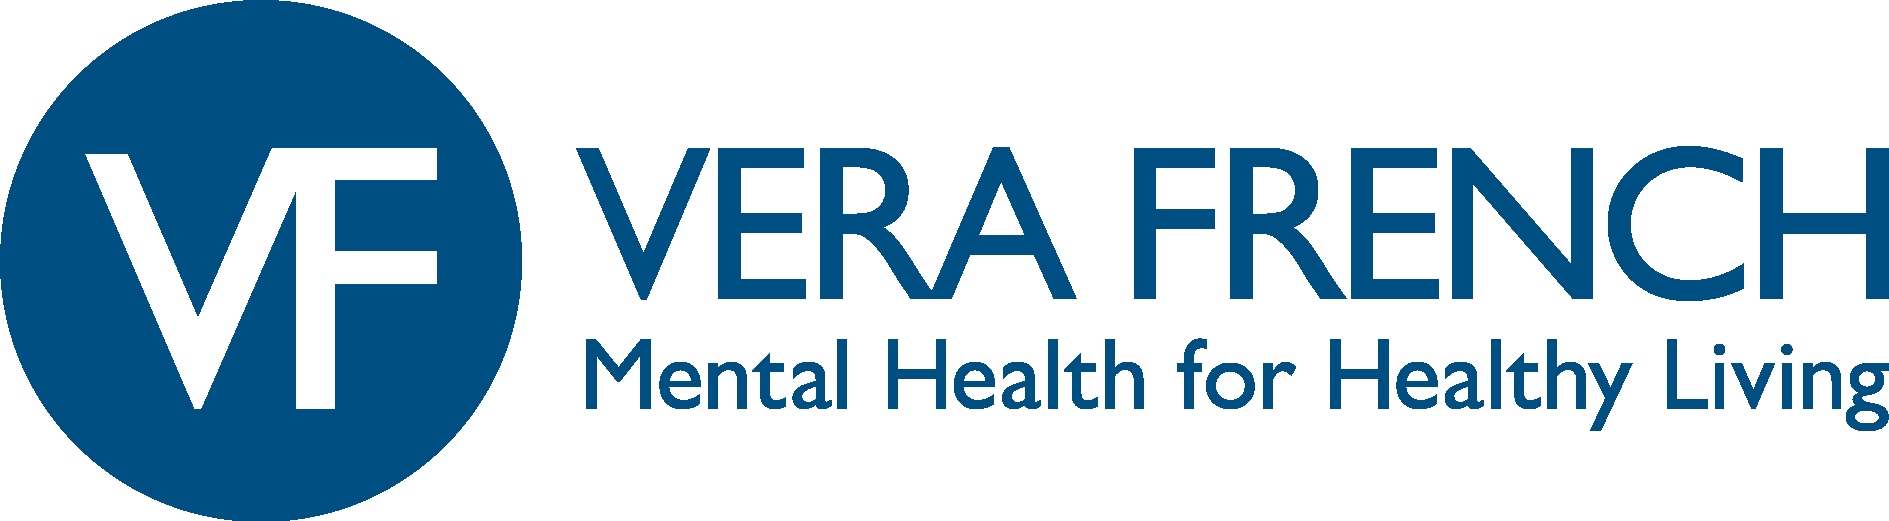 Vera French Mental Health Center